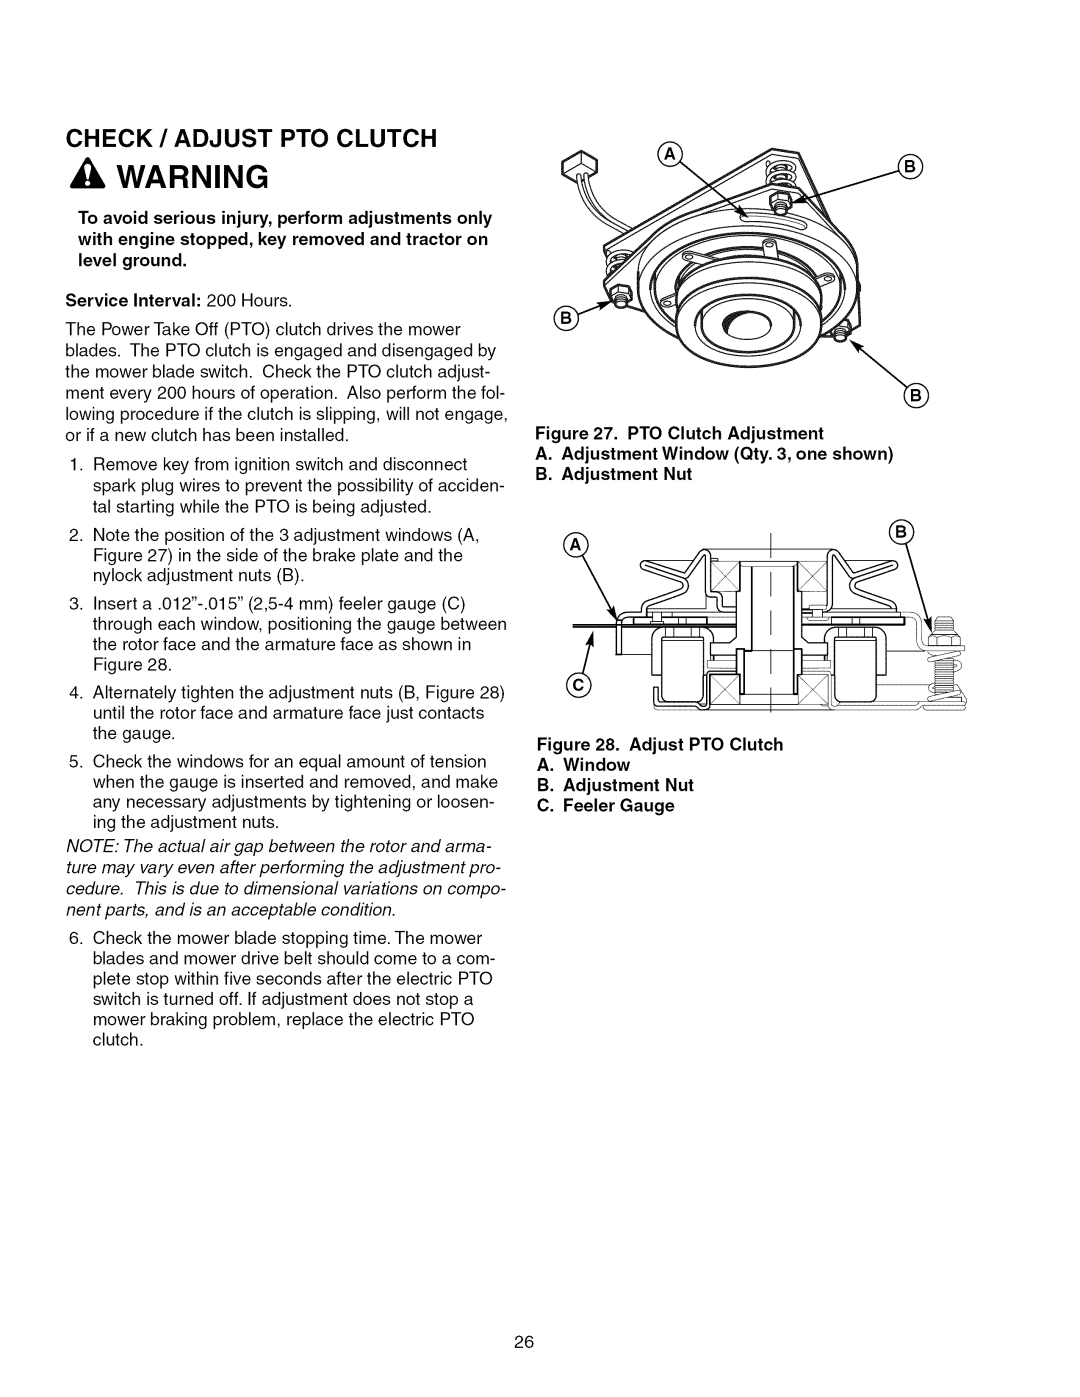 Craftsman 28986 manual Check / Adjust Pto Clutch, PTO Clutch Adjustment, Adjust PTO Clutch, B.Adjustment Nut C.Feeler Gauge 